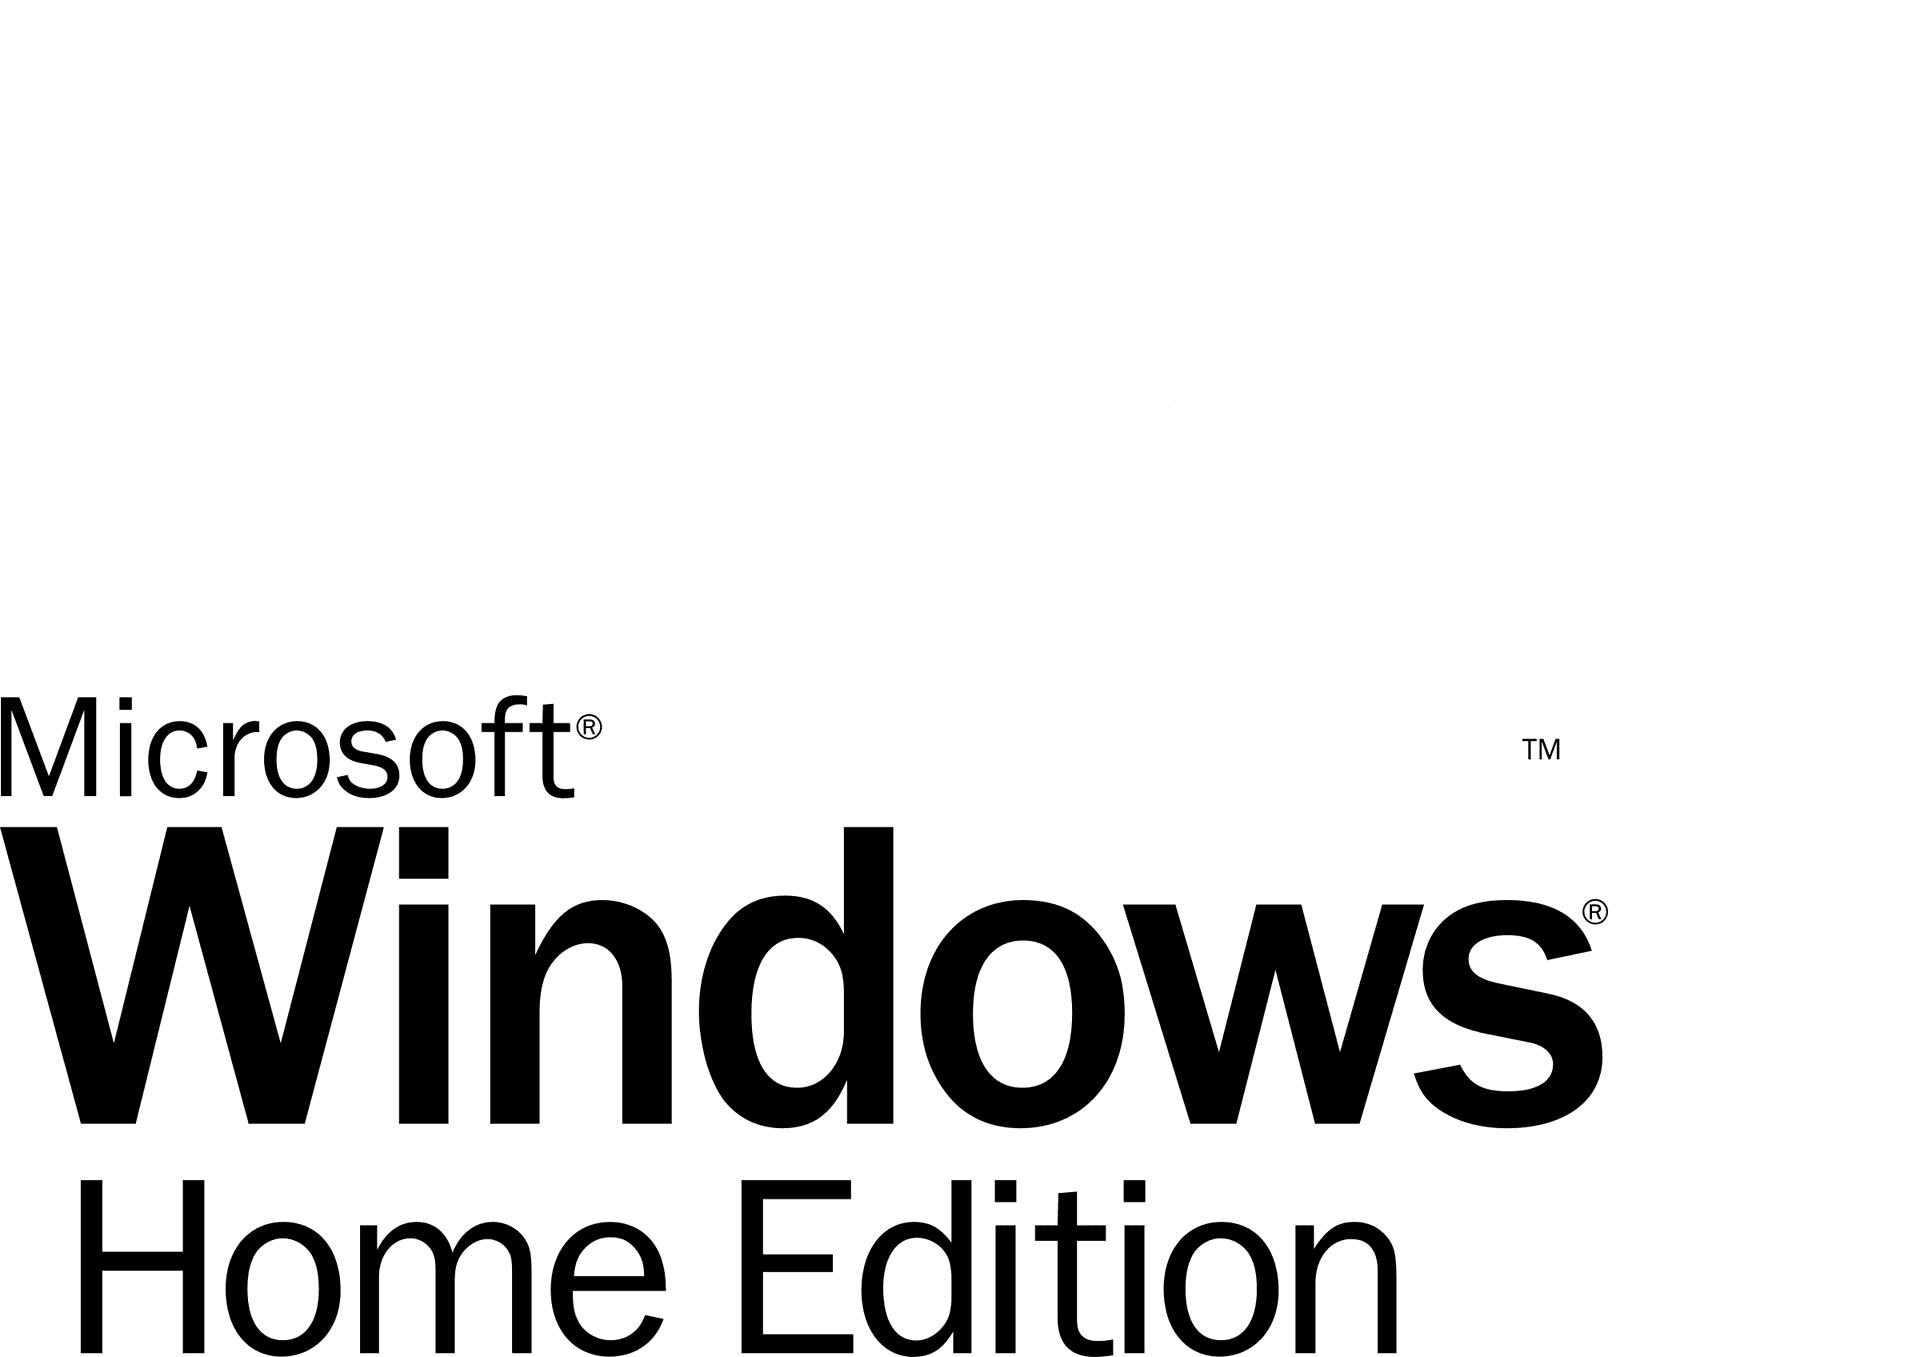 Microsoft Windows X P Home Edition Logo PNG